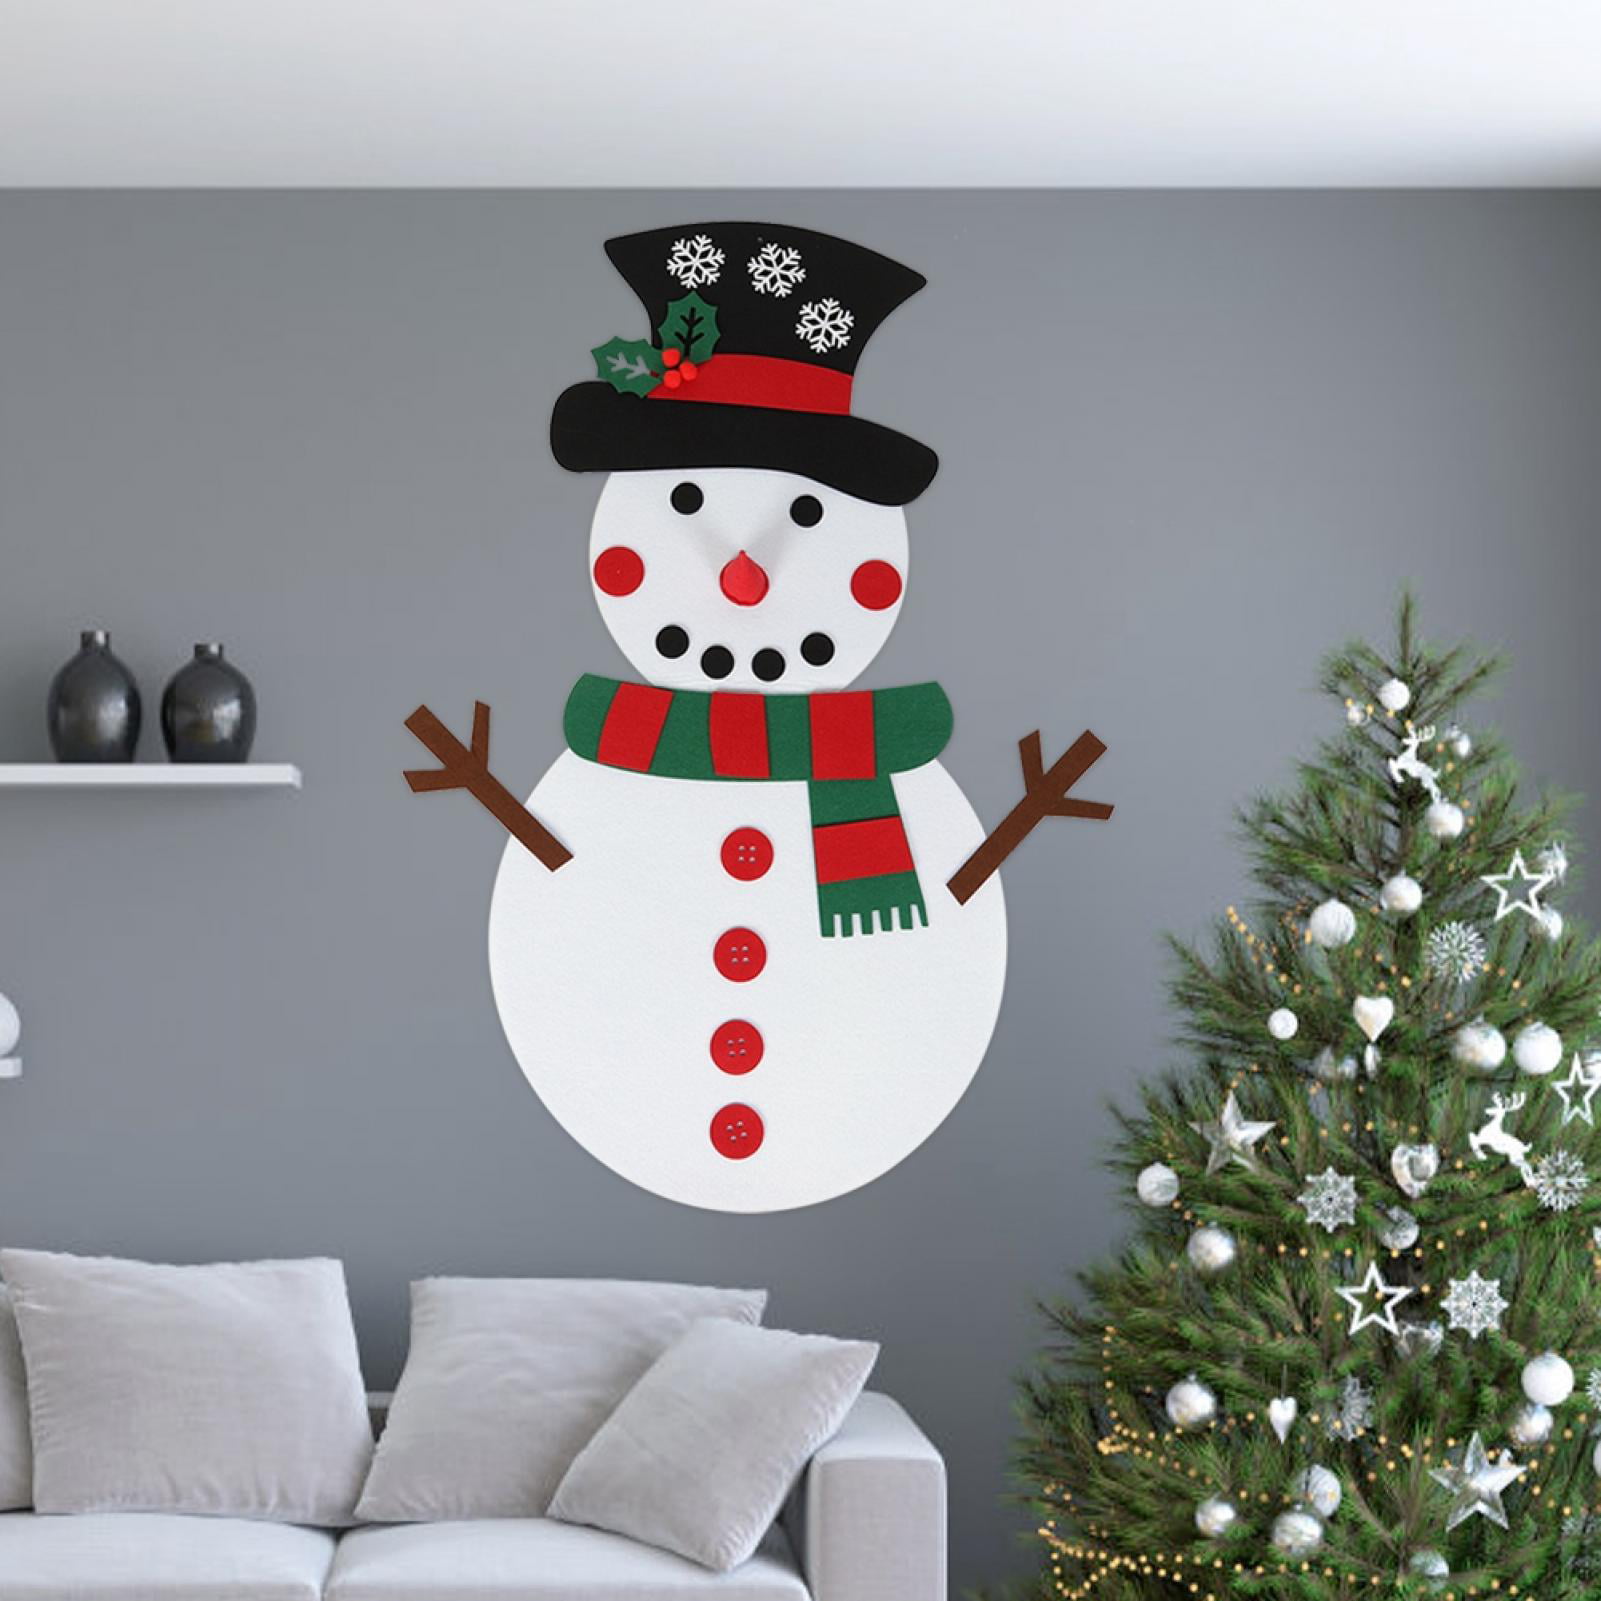 Details about   Fun Multi-color 5" Lightup Snowman Christmas Ornament 